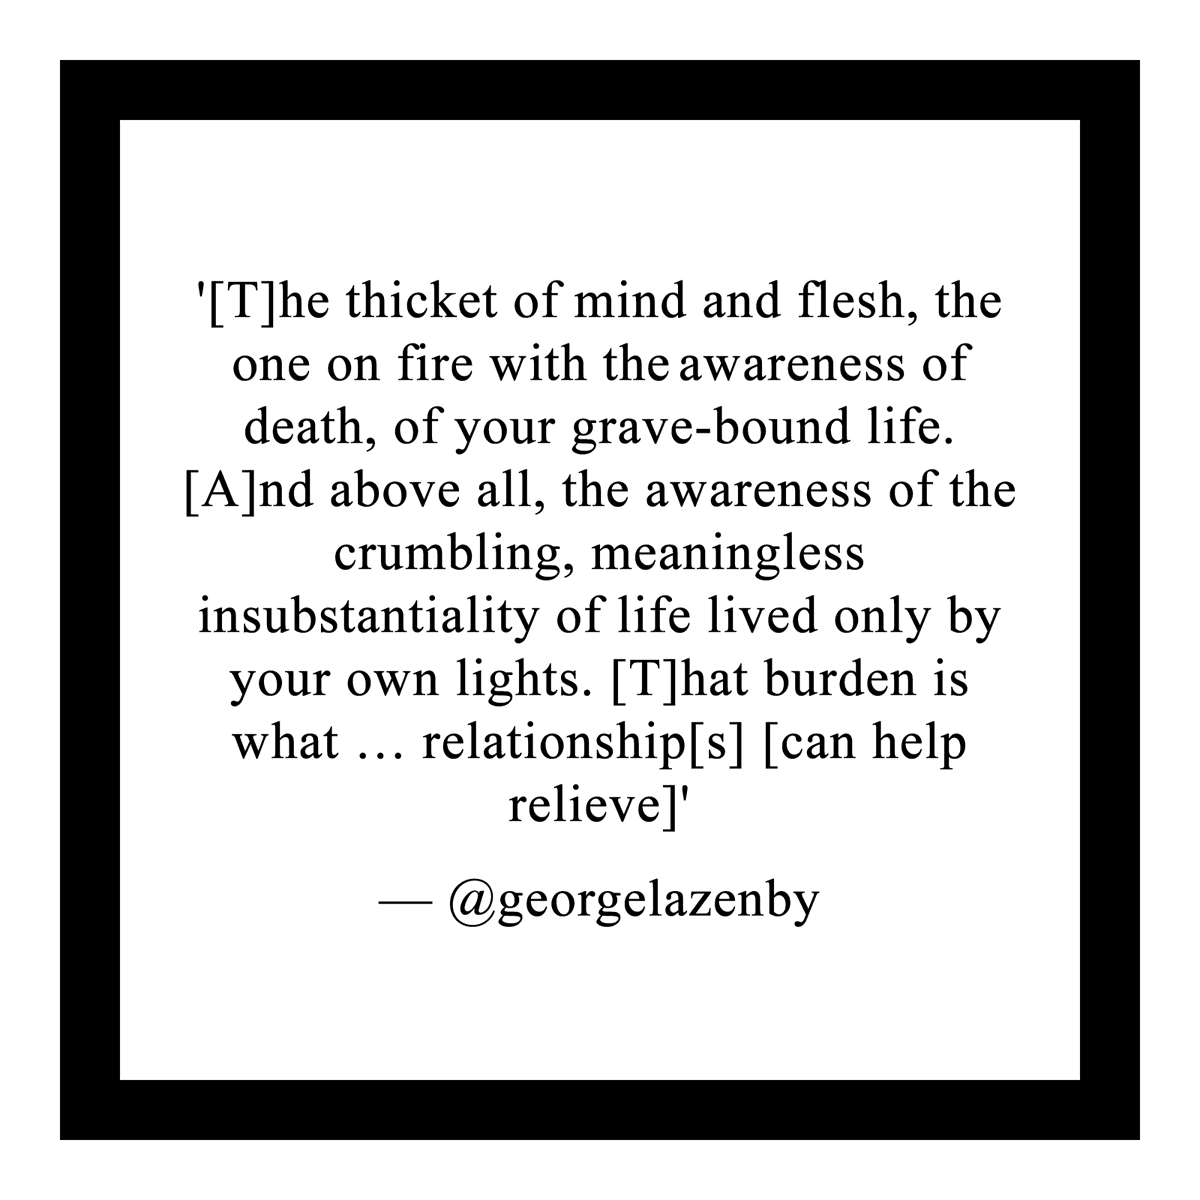 Source: @georgelazenby  on Tumblr tumblr.com/lazenby/693408…

#Death #DeathAwareness #MortalityAwareness #HumanCondition #Connection #Relationships #nomoa